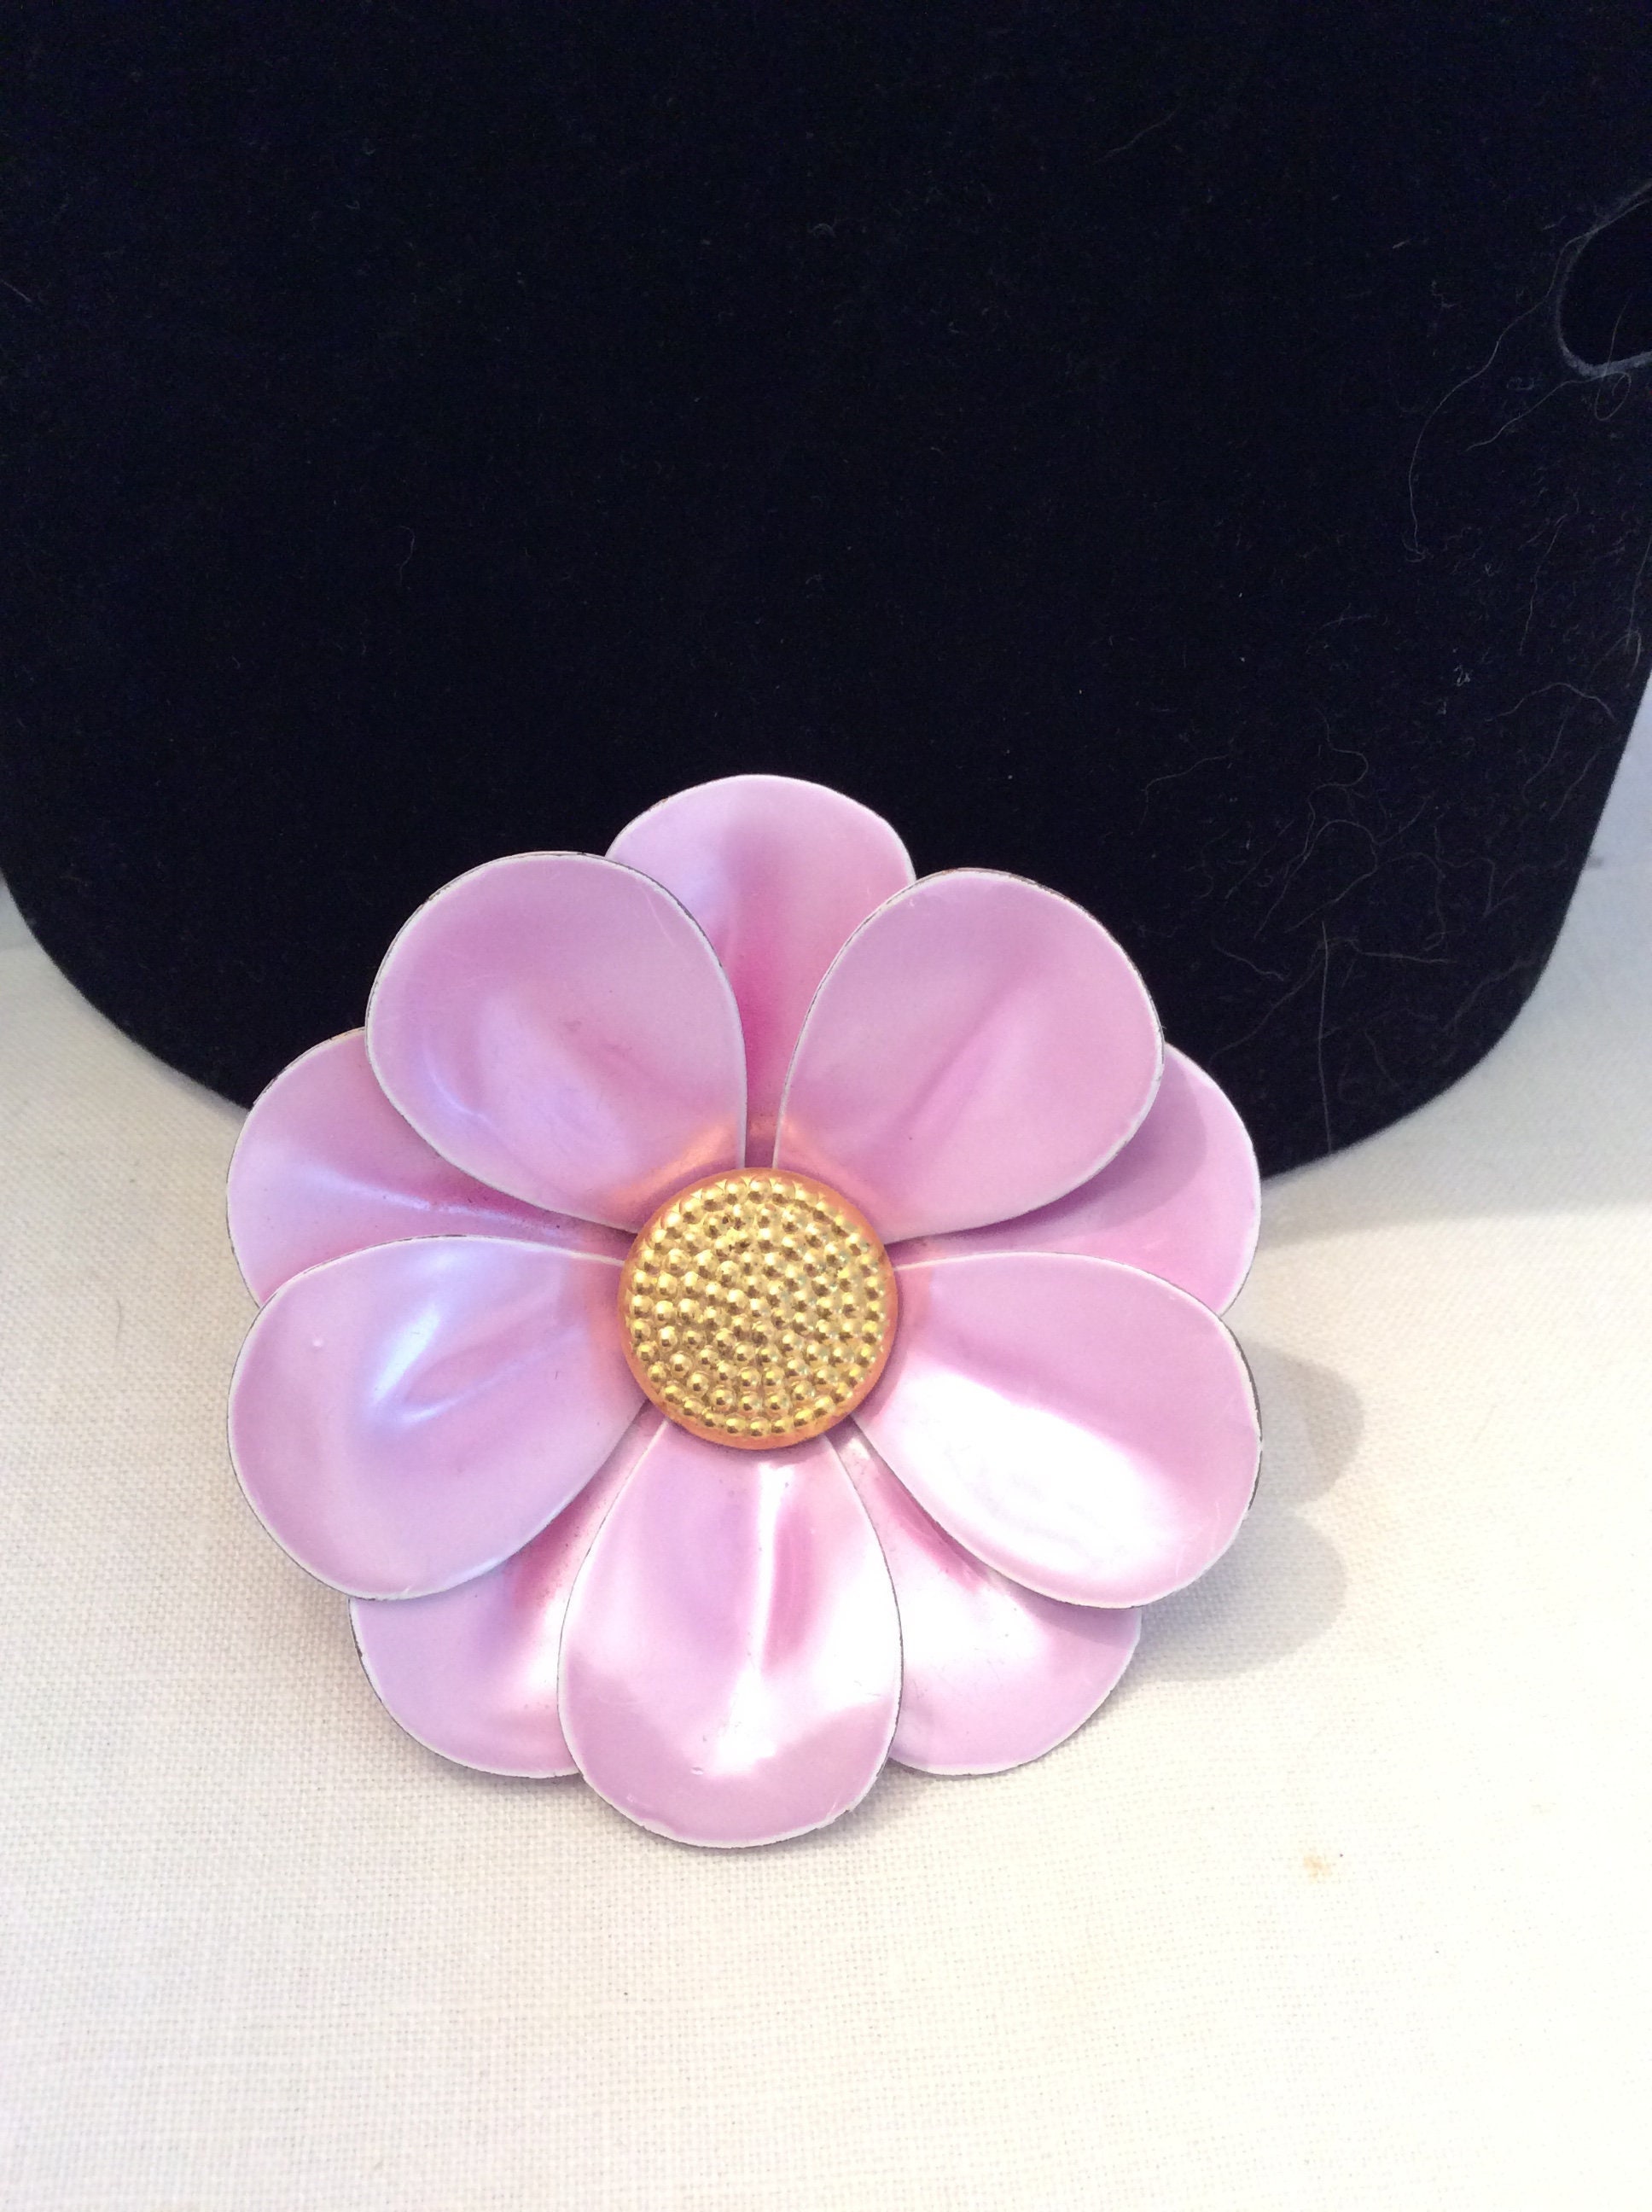 LONG 10mm SHAFT, Pink Heath, Native Flower, Pink Blossom